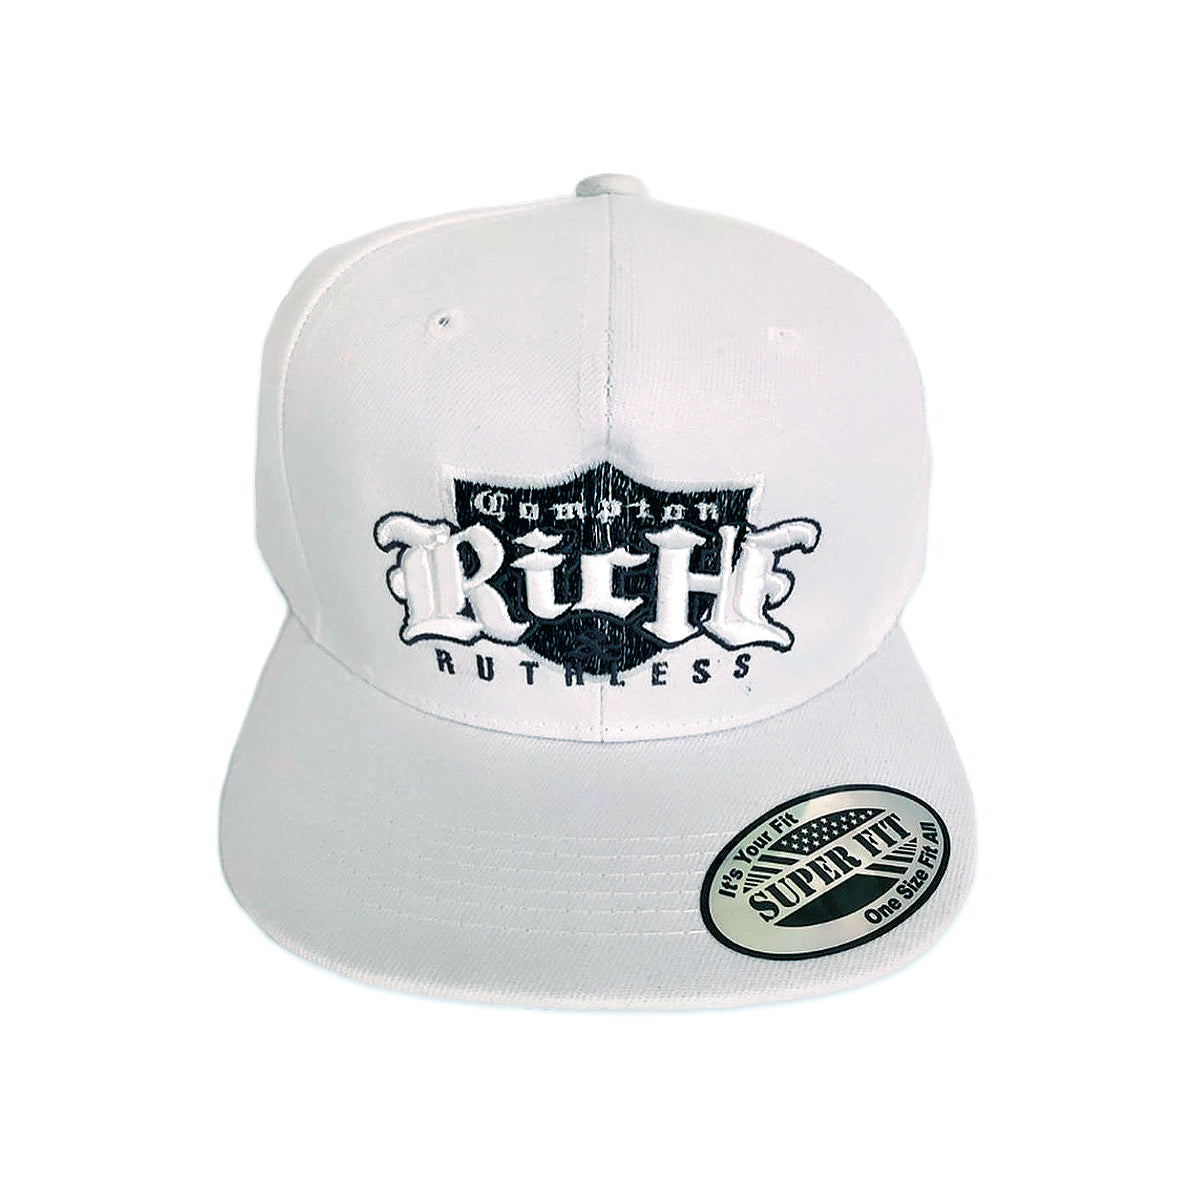 Compton Rich & Ruthless Retro Crest (Snapback White)